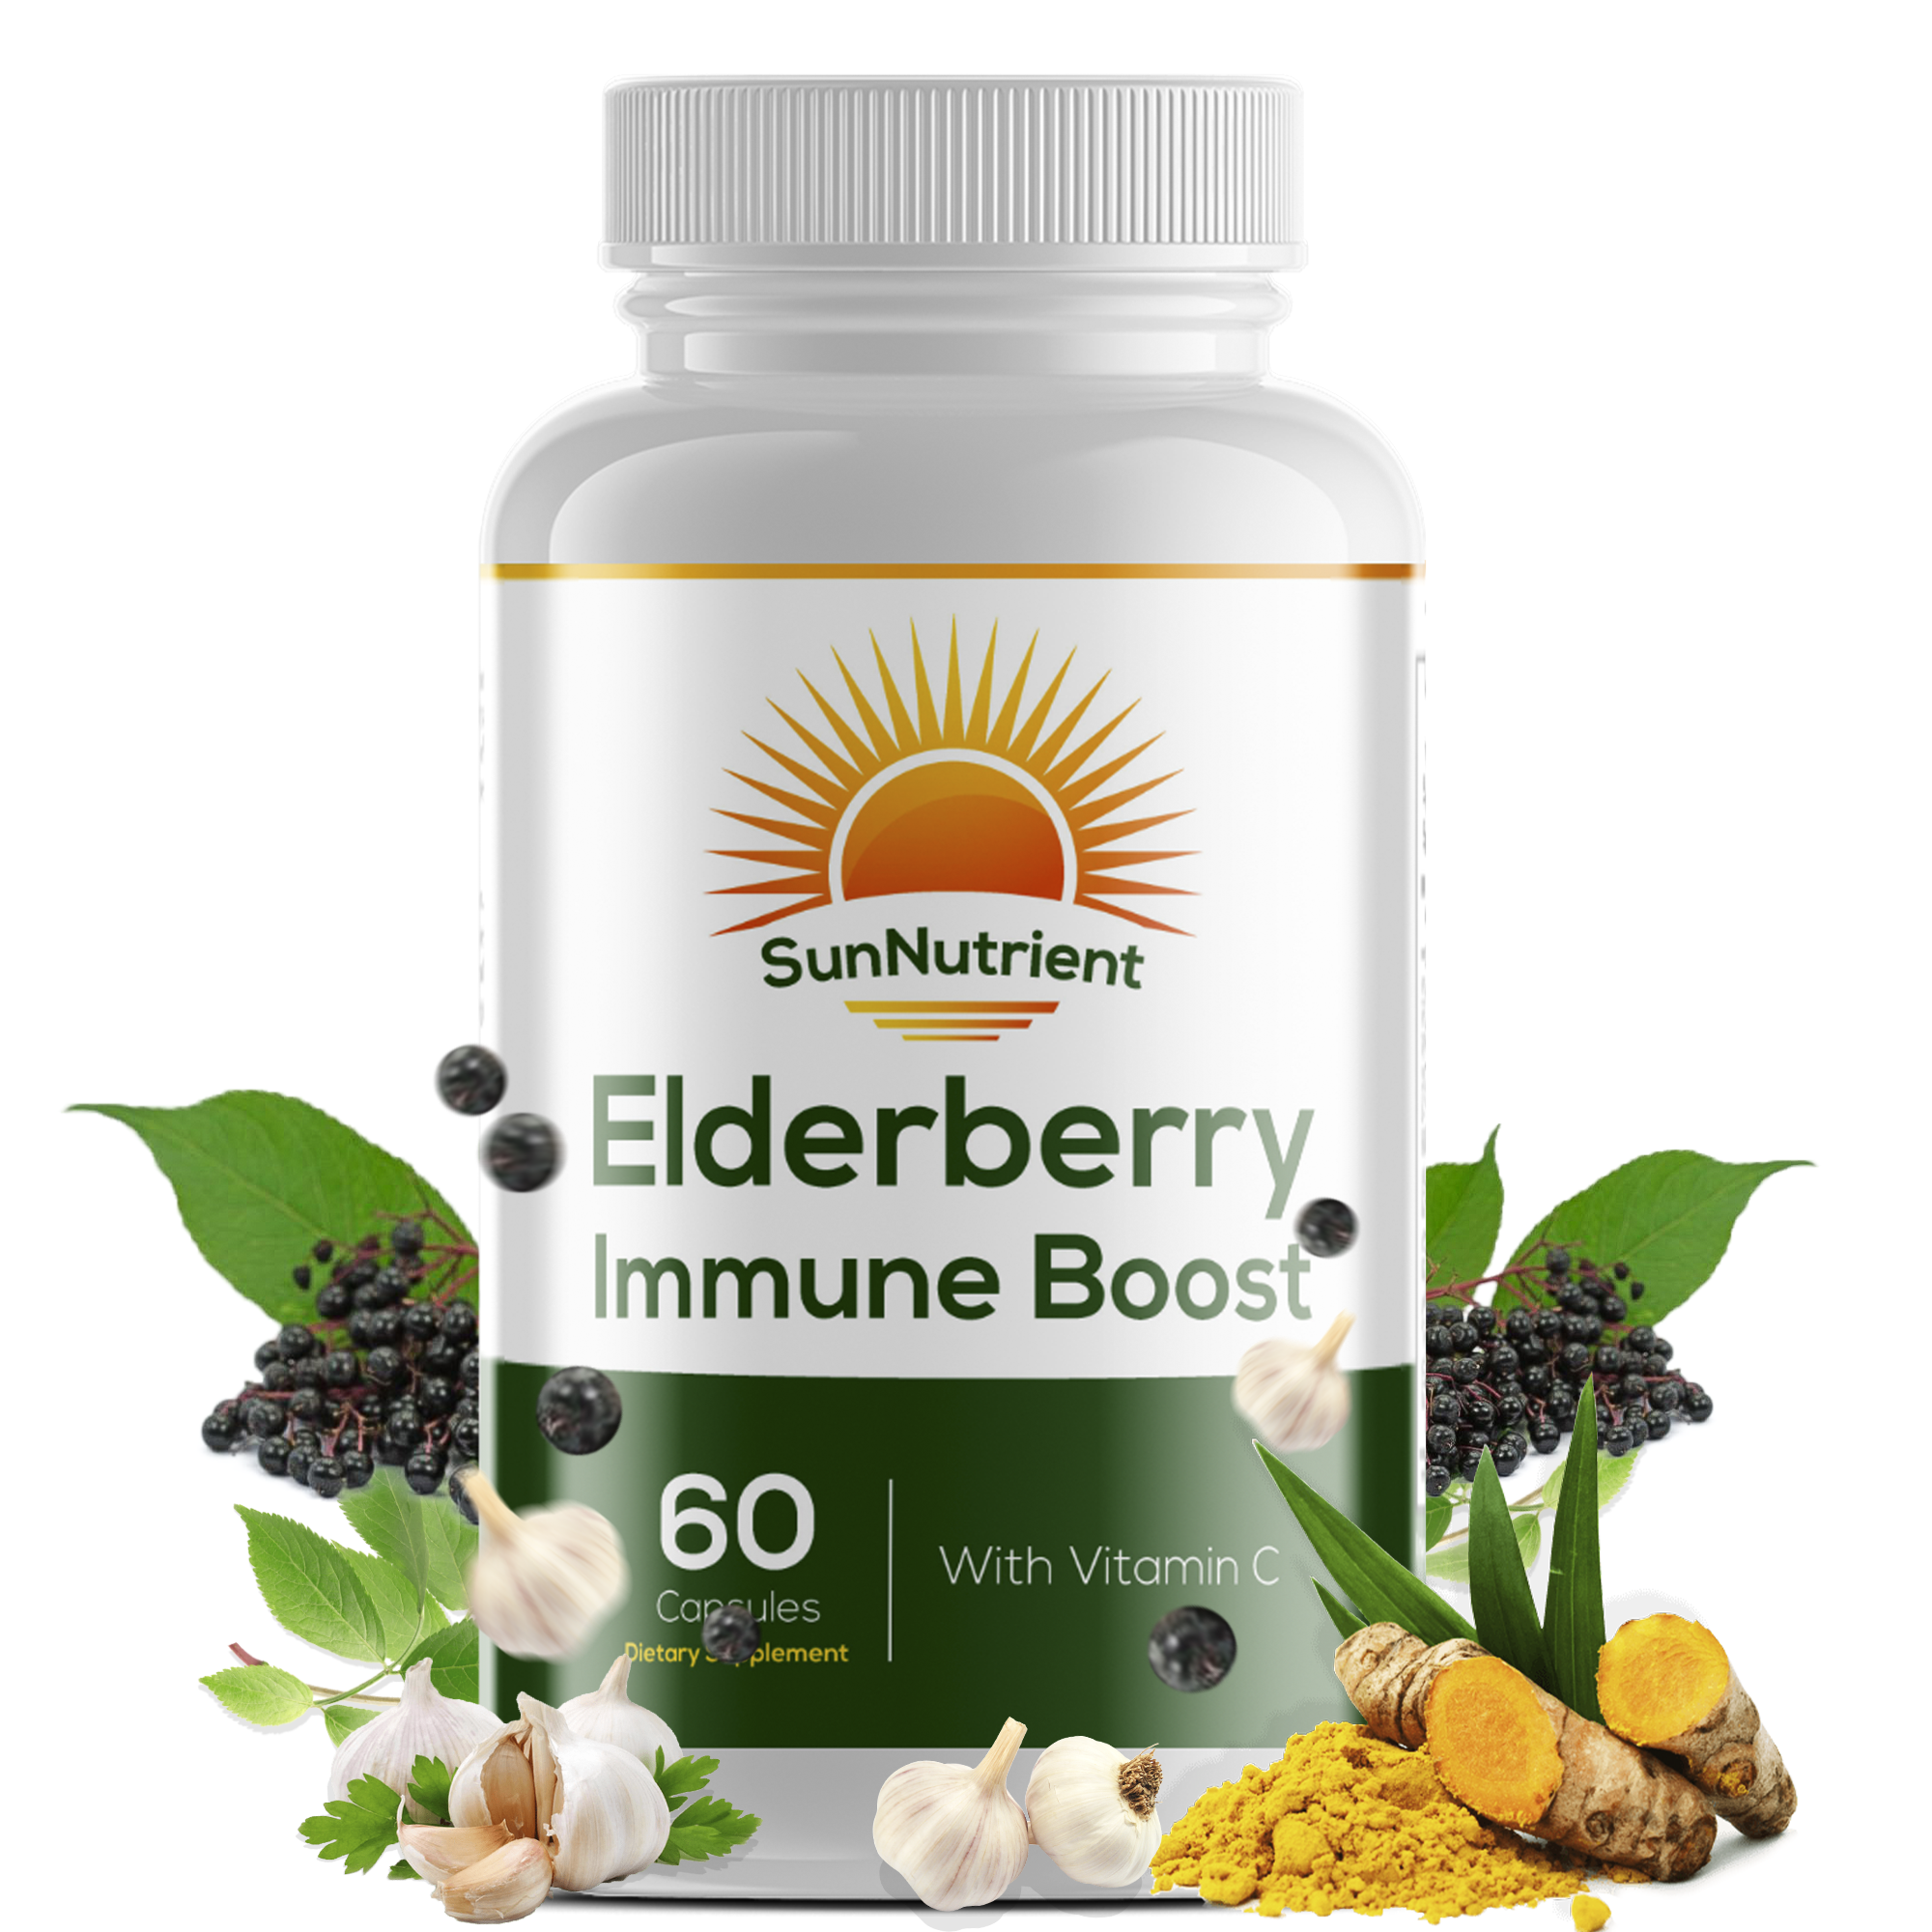 Elderberry Immune Boost with Vitamin C